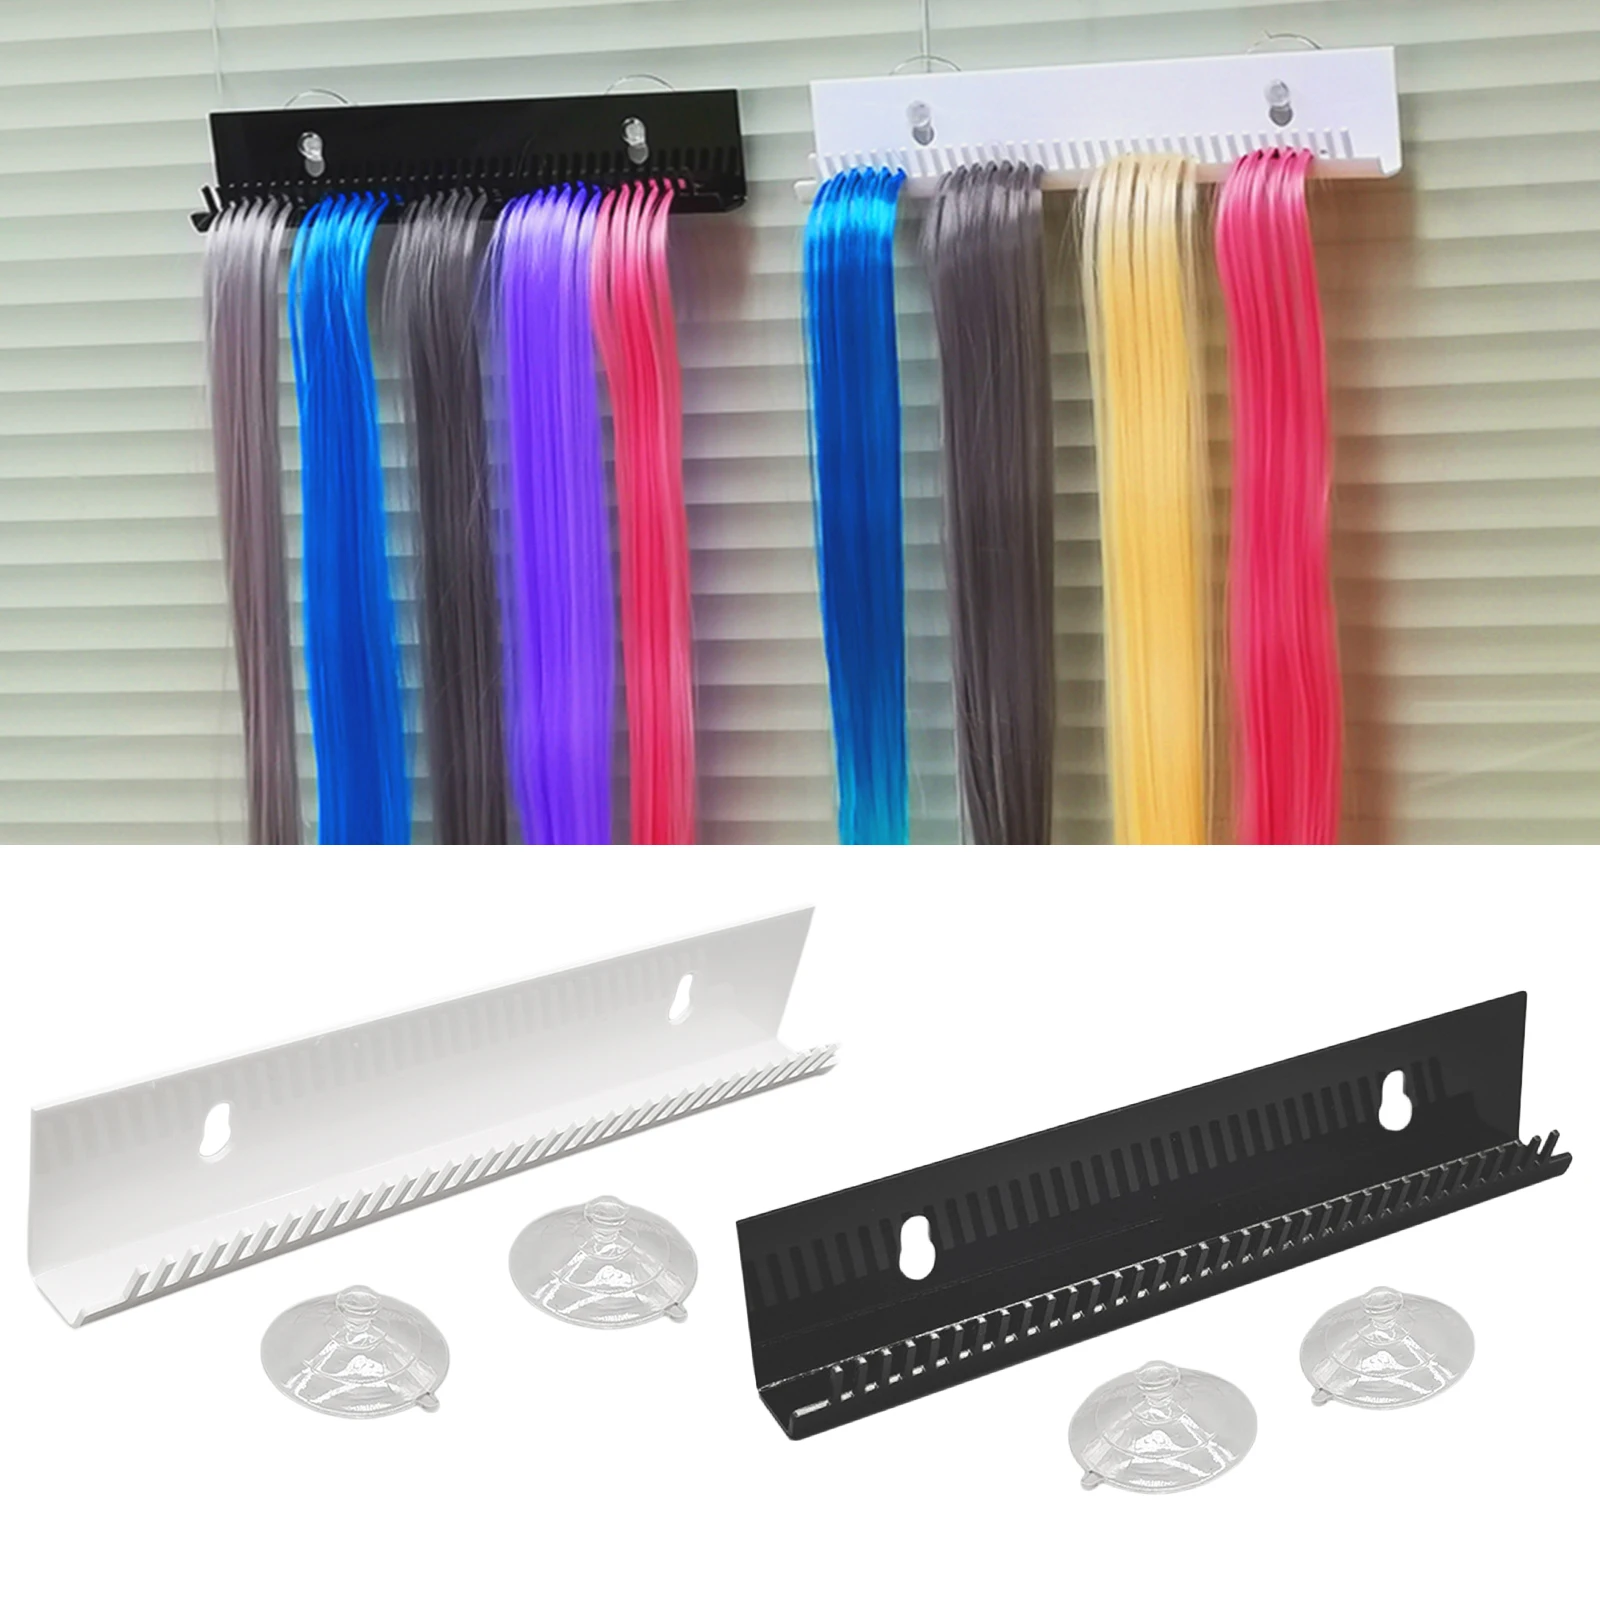 Professional Hair Extension Storage Holder Rack Hanger for Braiding Weaving